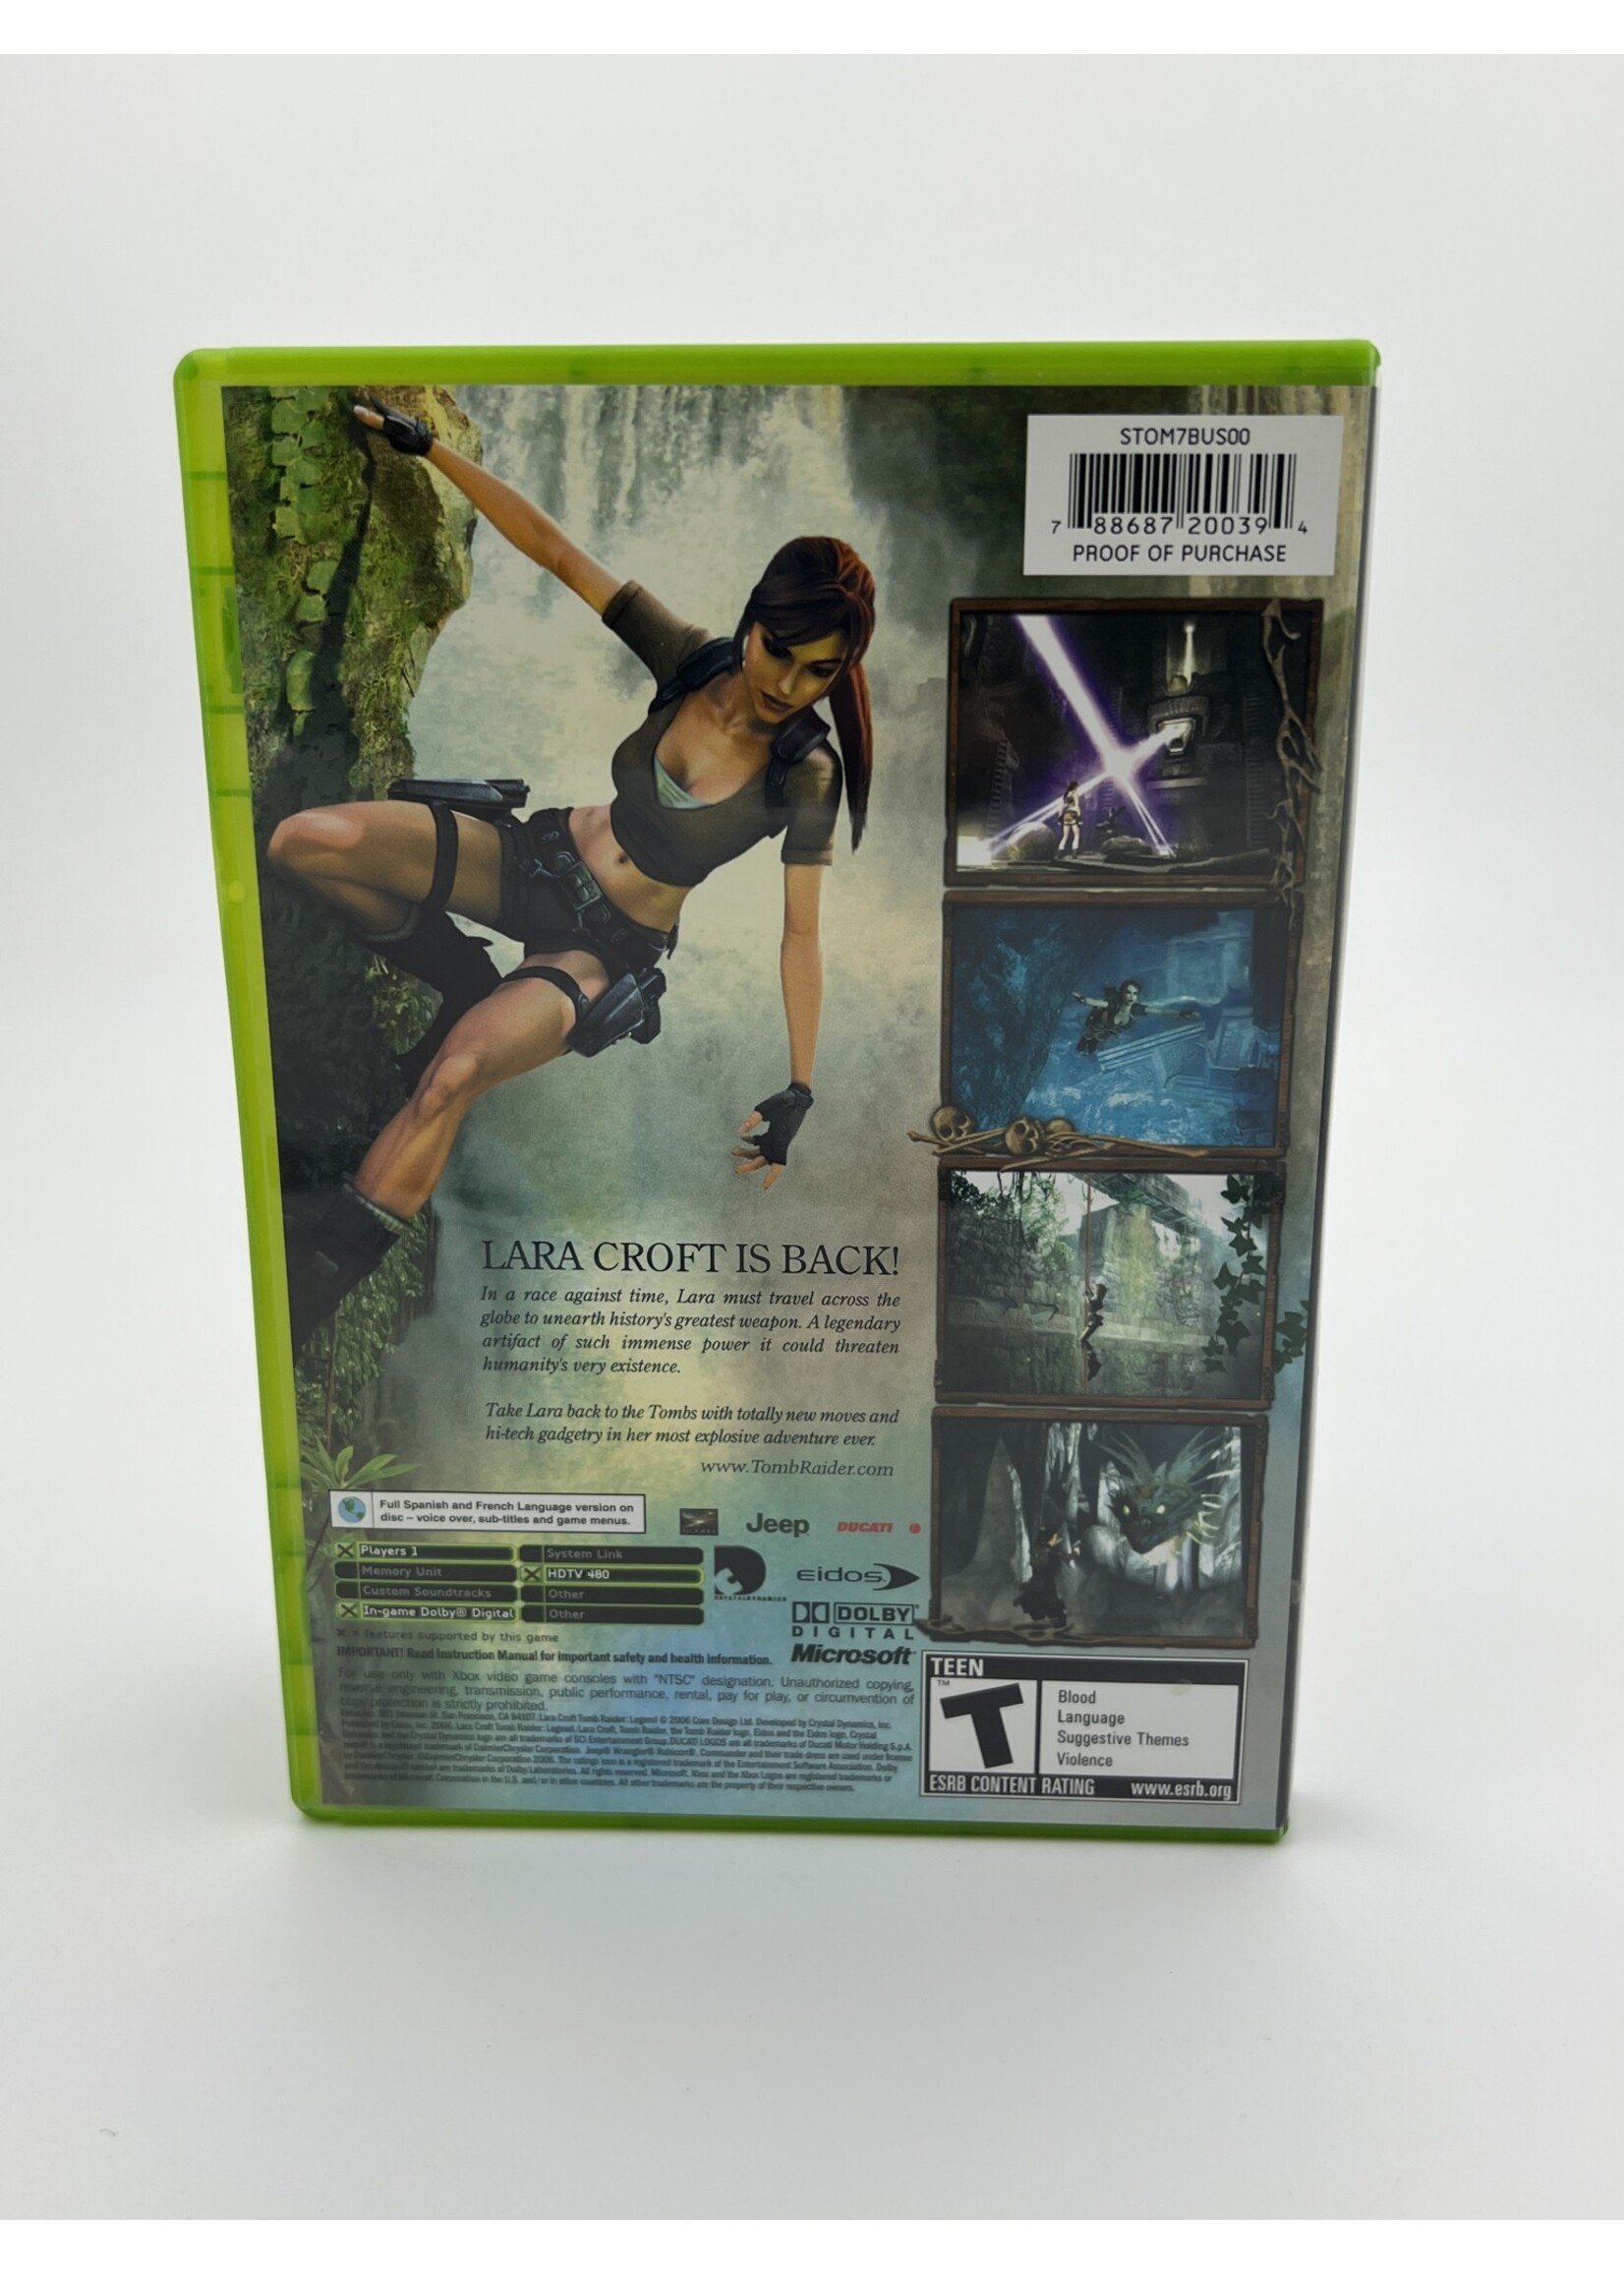 Xbox Lara Croft Tomb Raider Legend Xbox